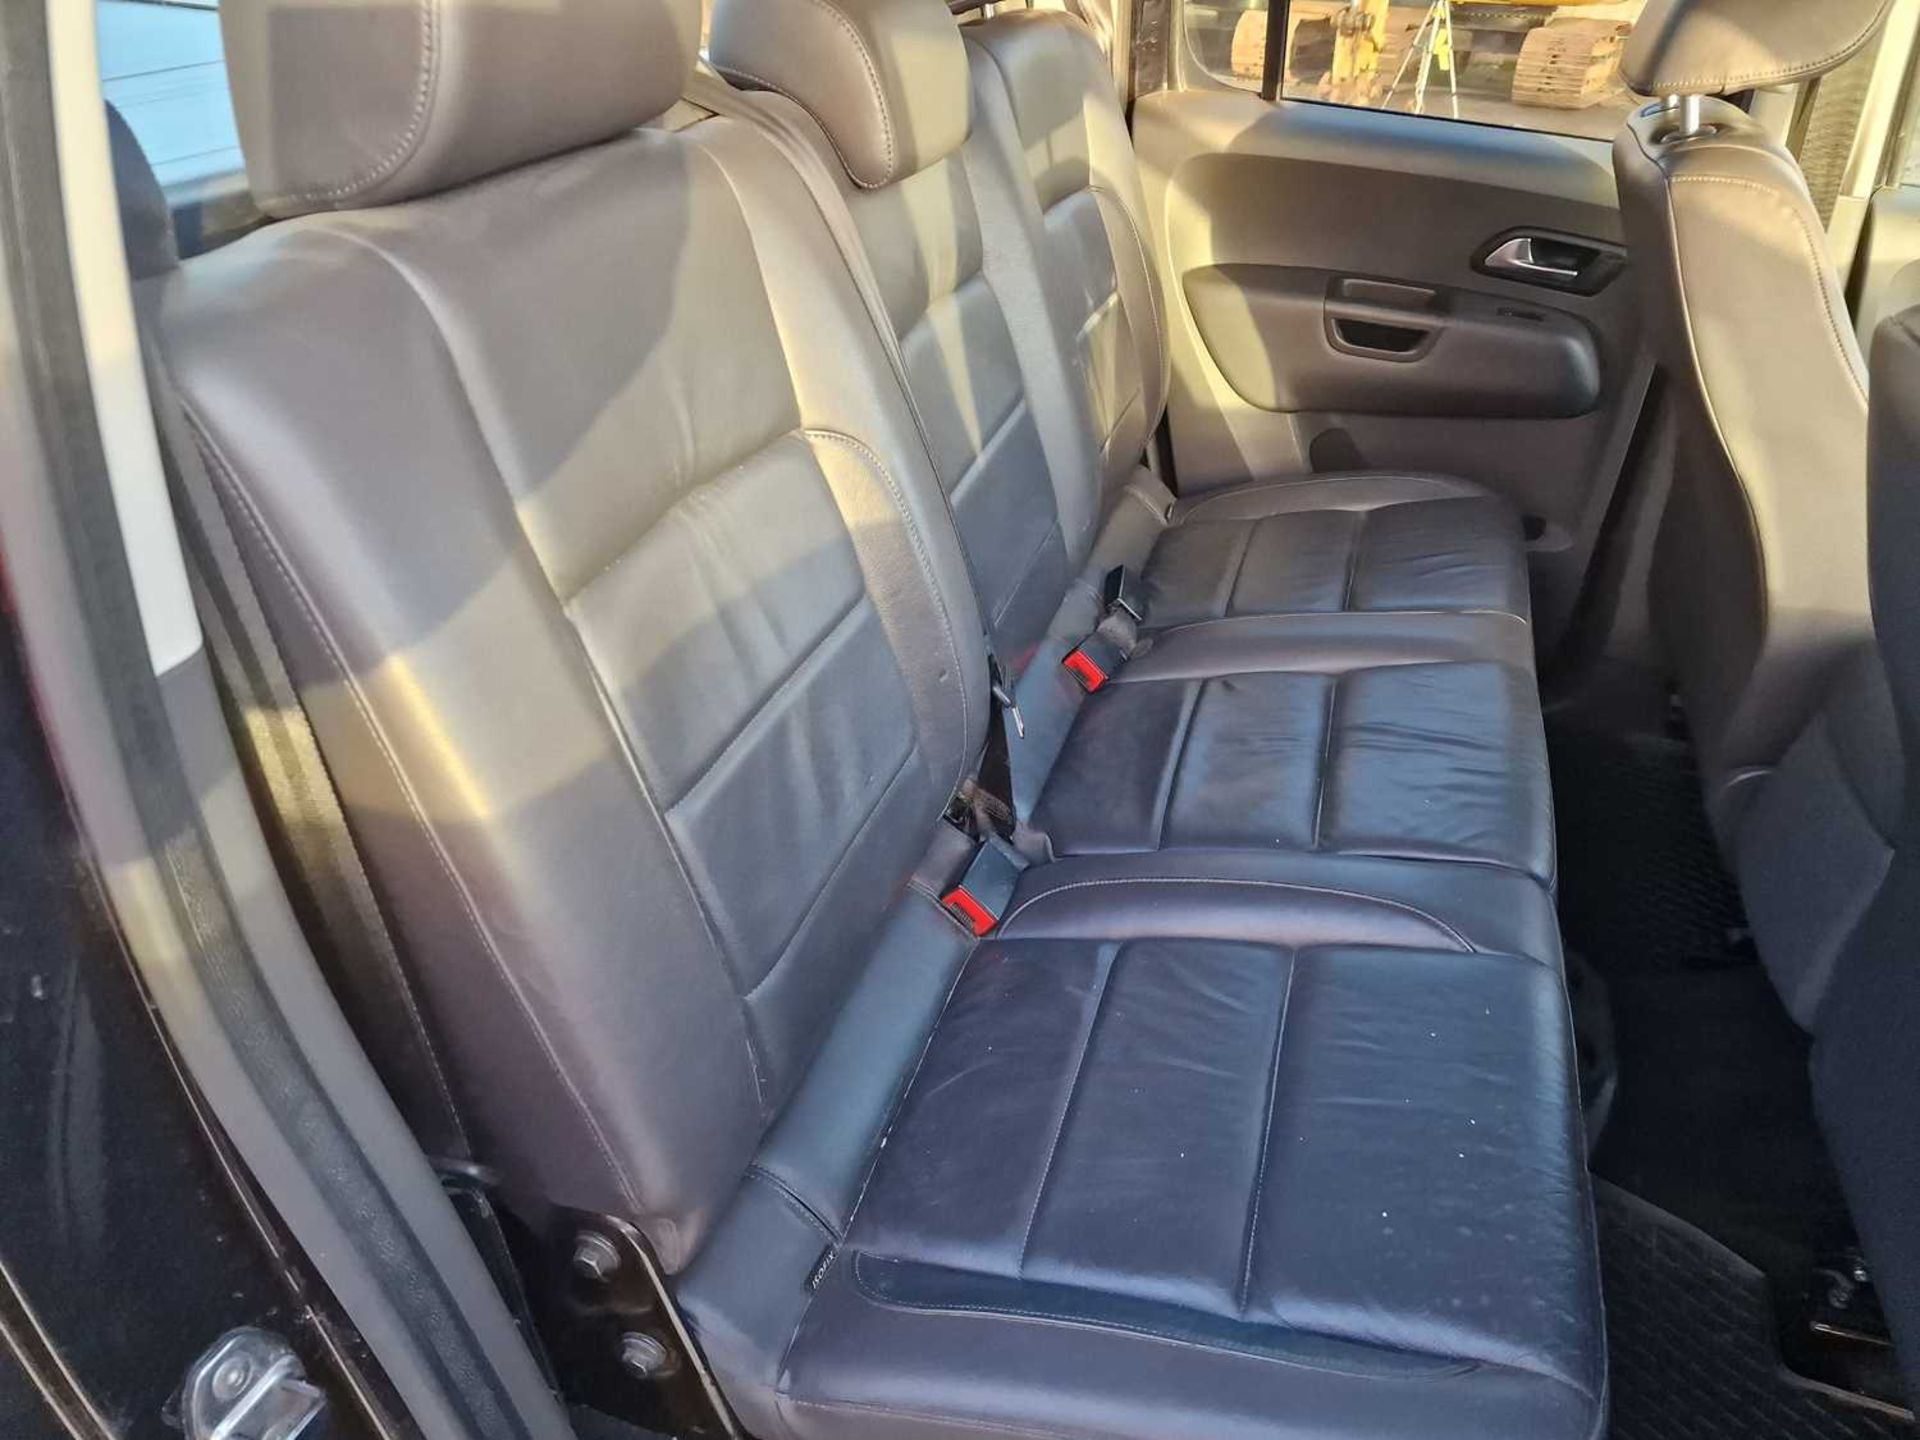 2018 VW Amarok TDI Bluemotion 4WD Crew Cab Pick Up, Auto, Sat Nav, Parking Sensors, Full Leather, He - Image 17 of 23